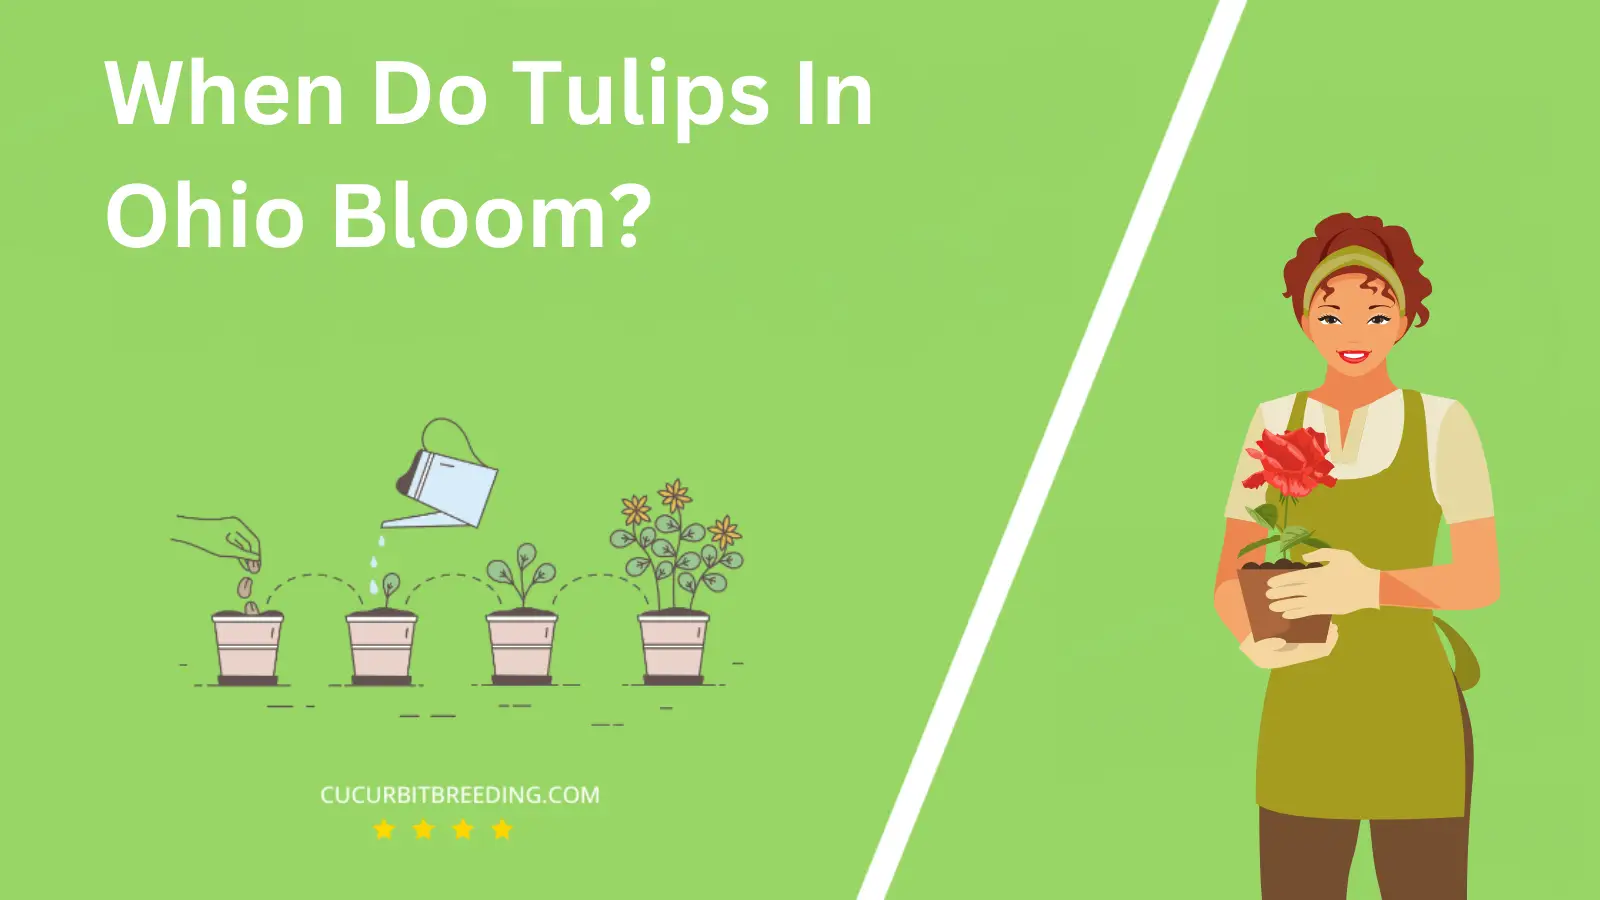 When Do Tulips In Ohio Bloom?